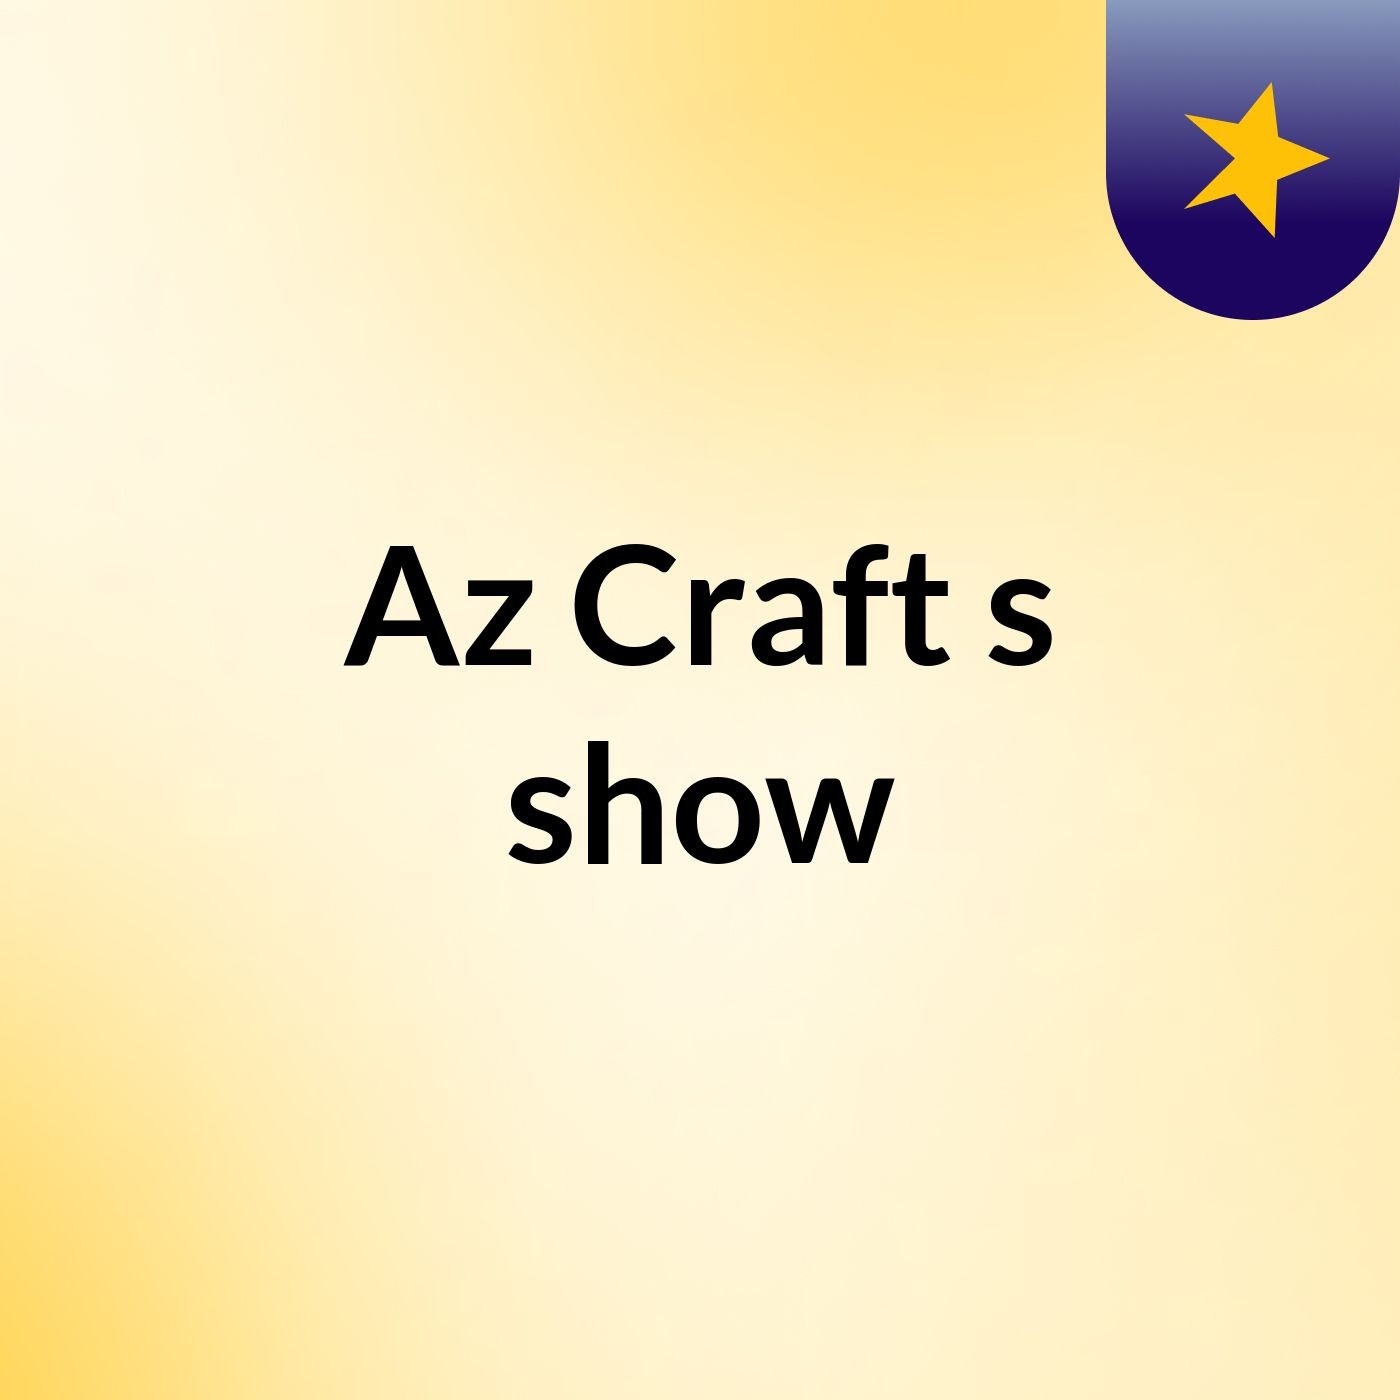 Az Craft's show